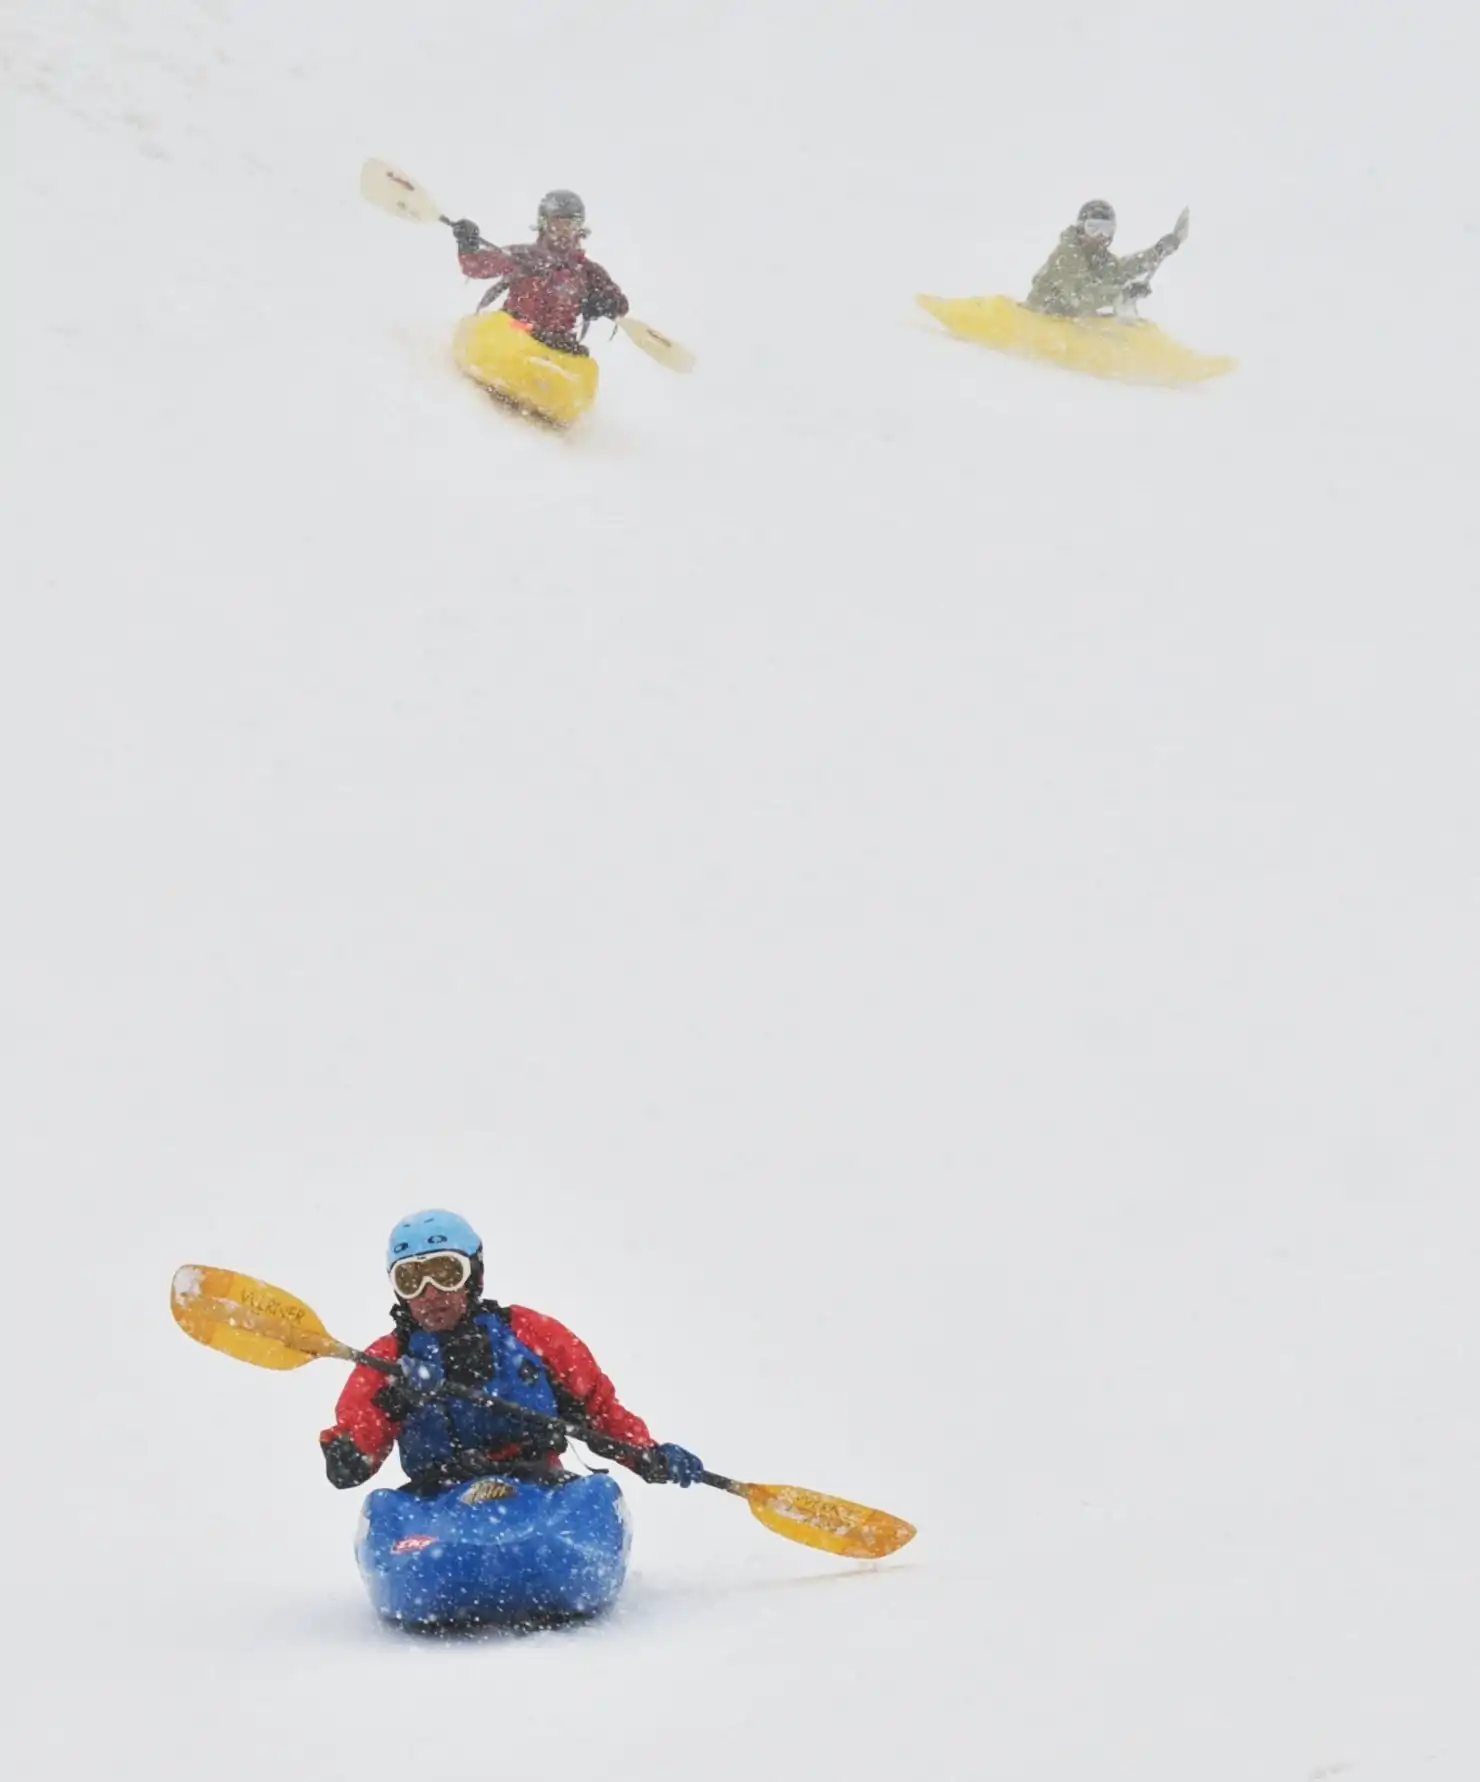 Ruige wintersporten Snow Kayaking